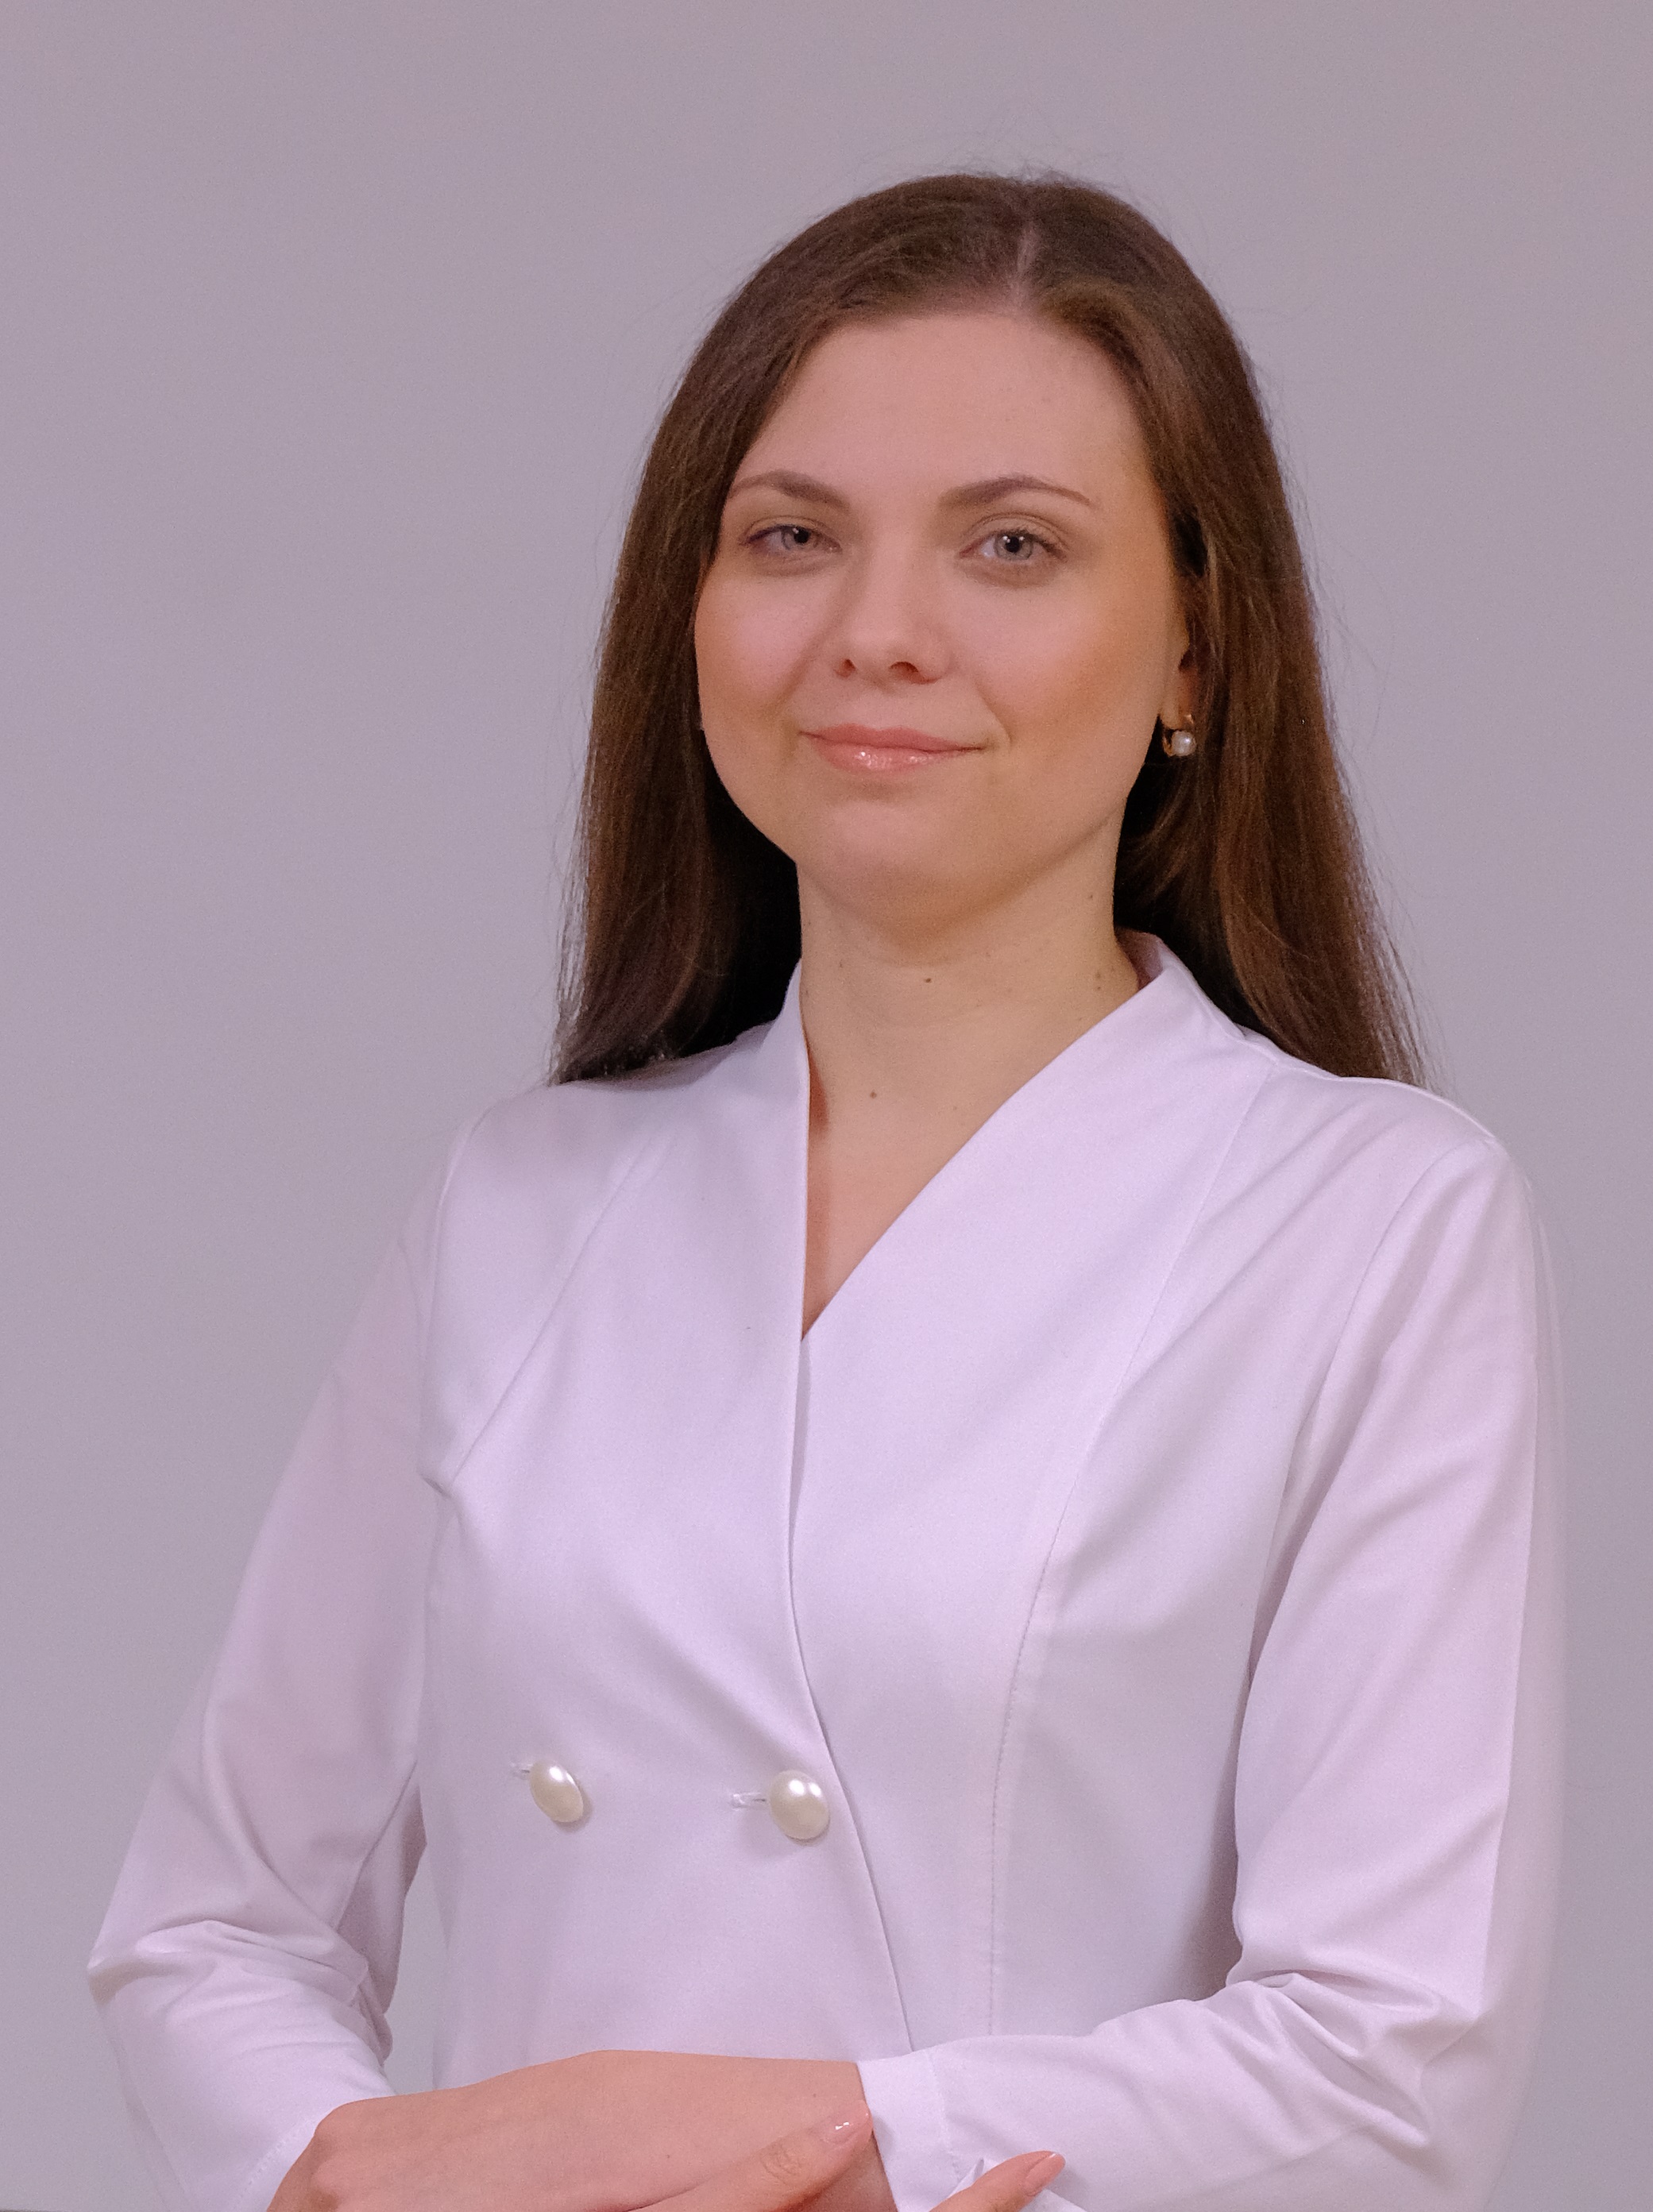 Раздолькина Дарья Сергеевна